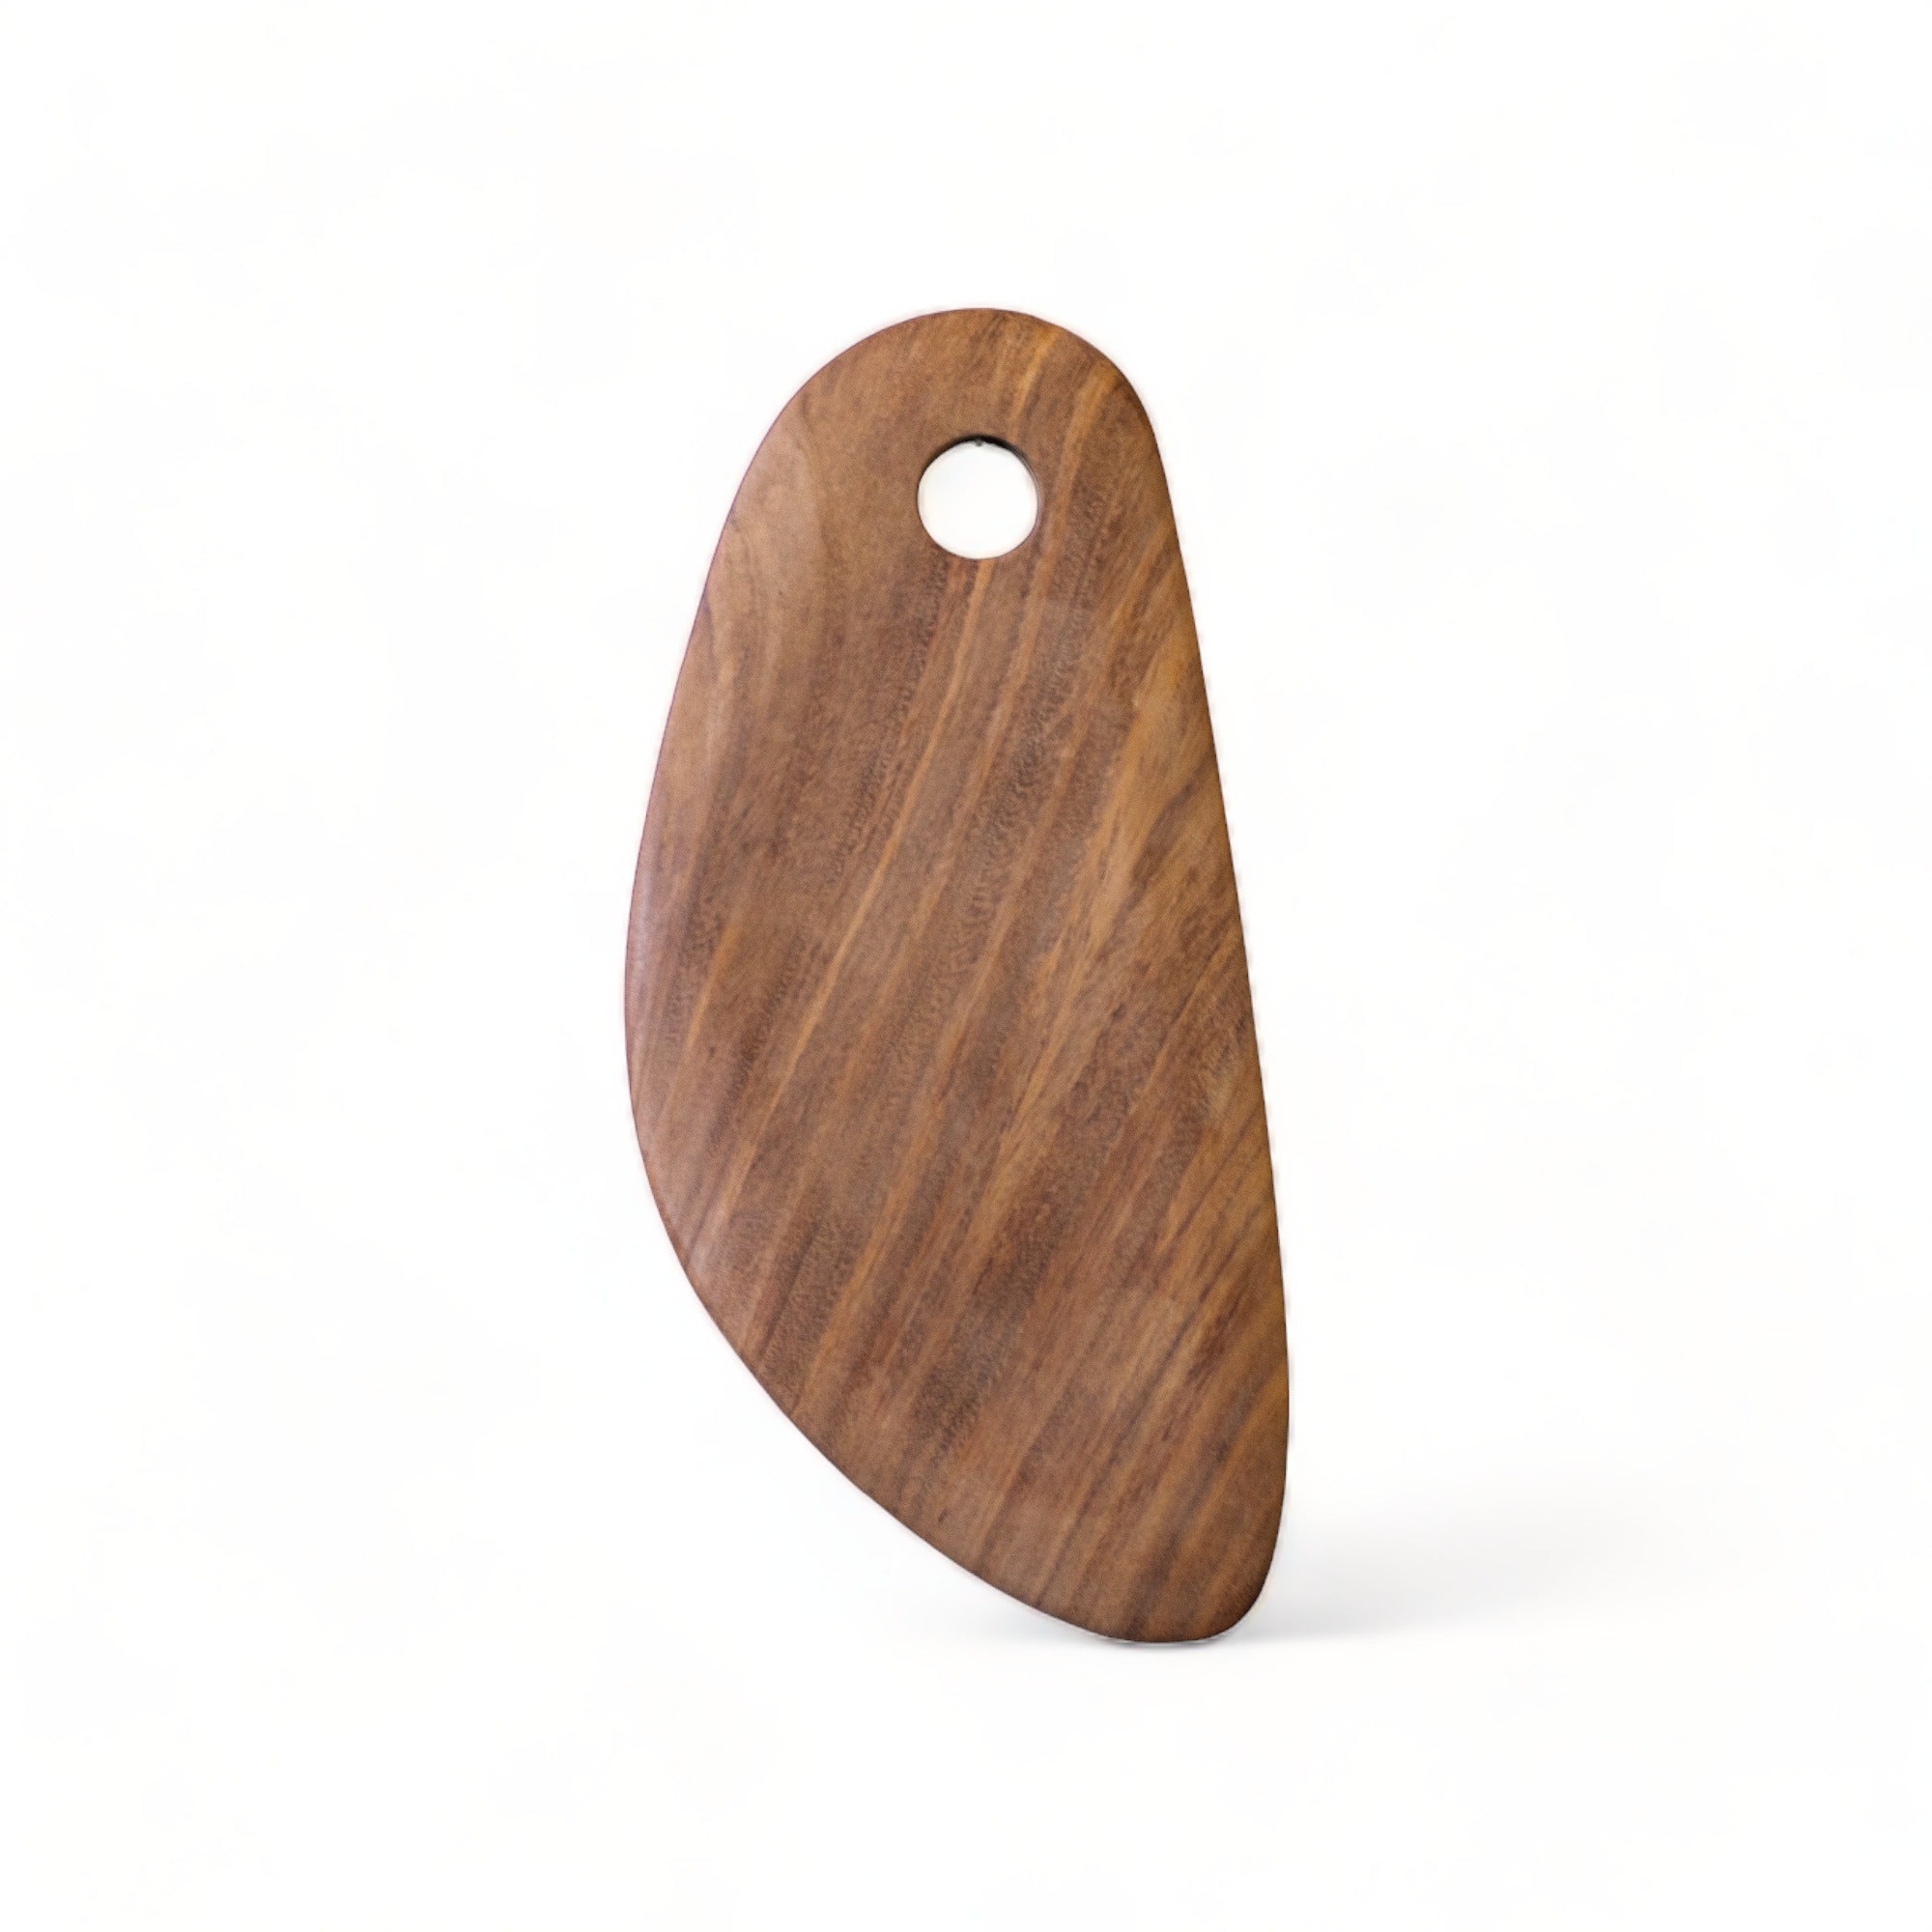 Medium Hand-Carved Wooden Board